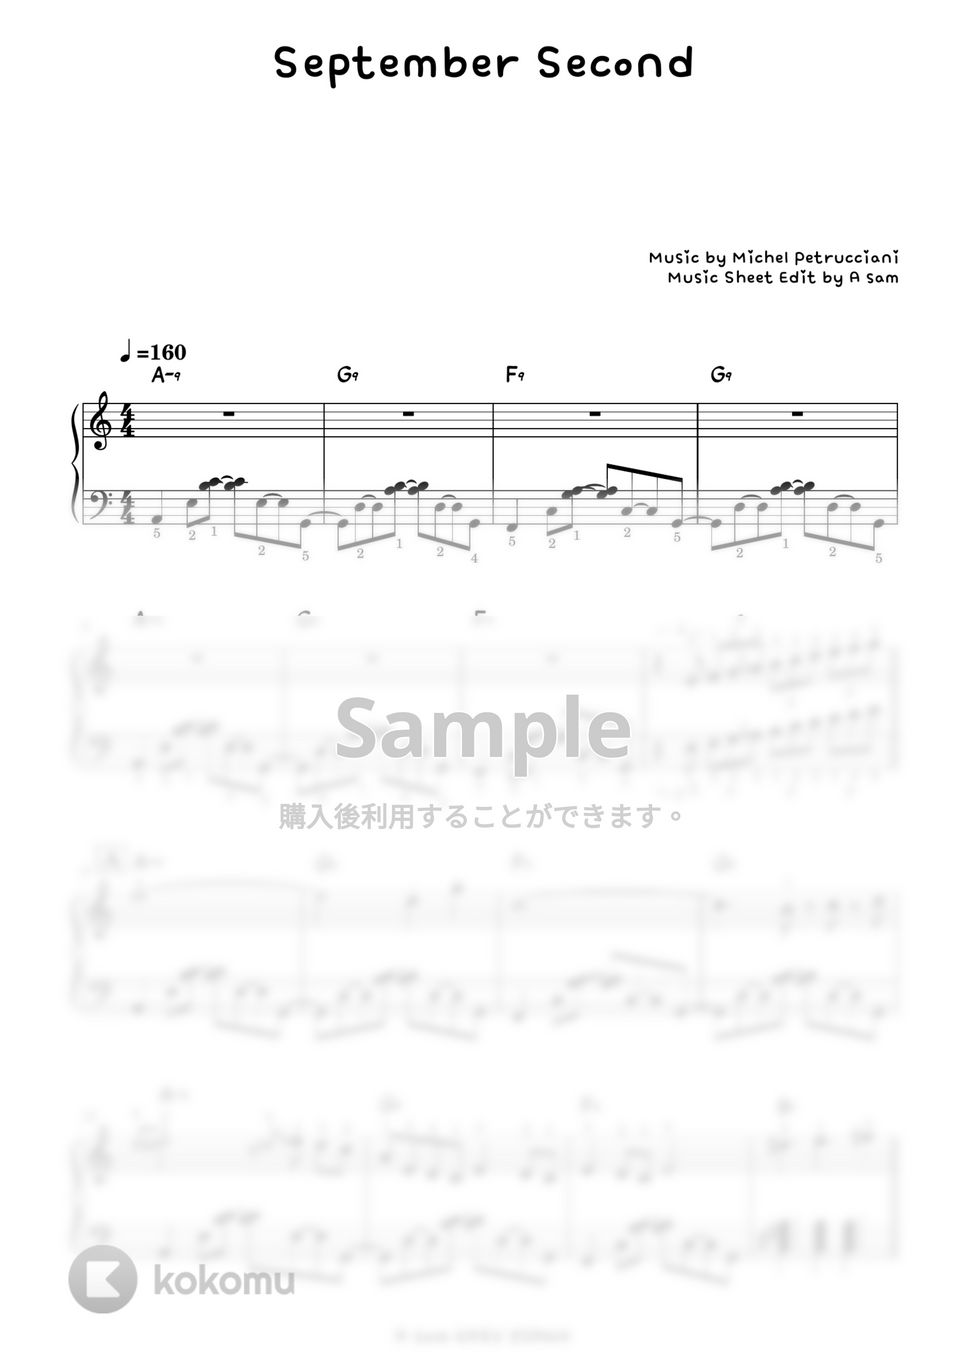 Michel Petrucciani - September second (ピアノ両手 / 上級 / 指番号あり) by A-sam